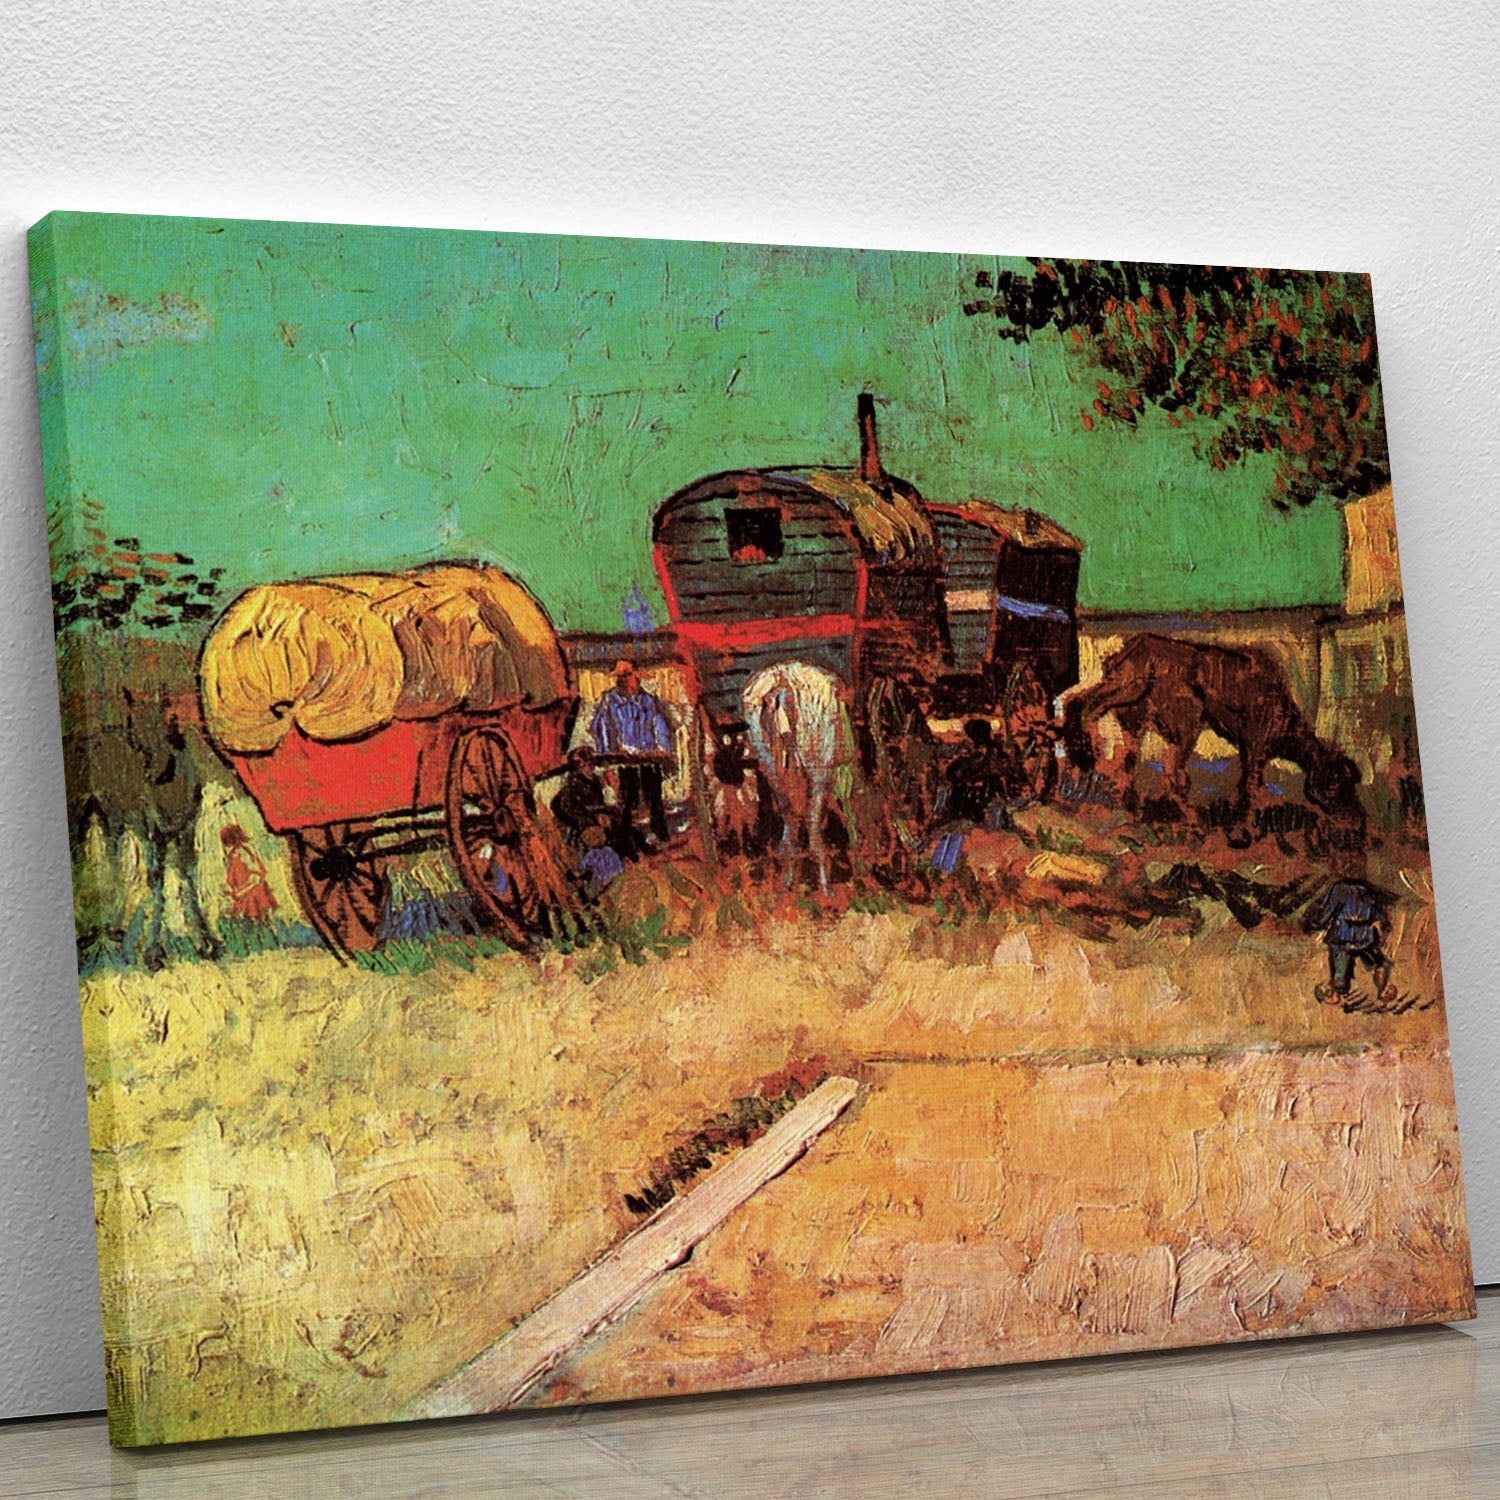 Encampment of Gypsies with Caravans by Van Gogh Canvas Print or Poster - Canvas Art Rocks - 1